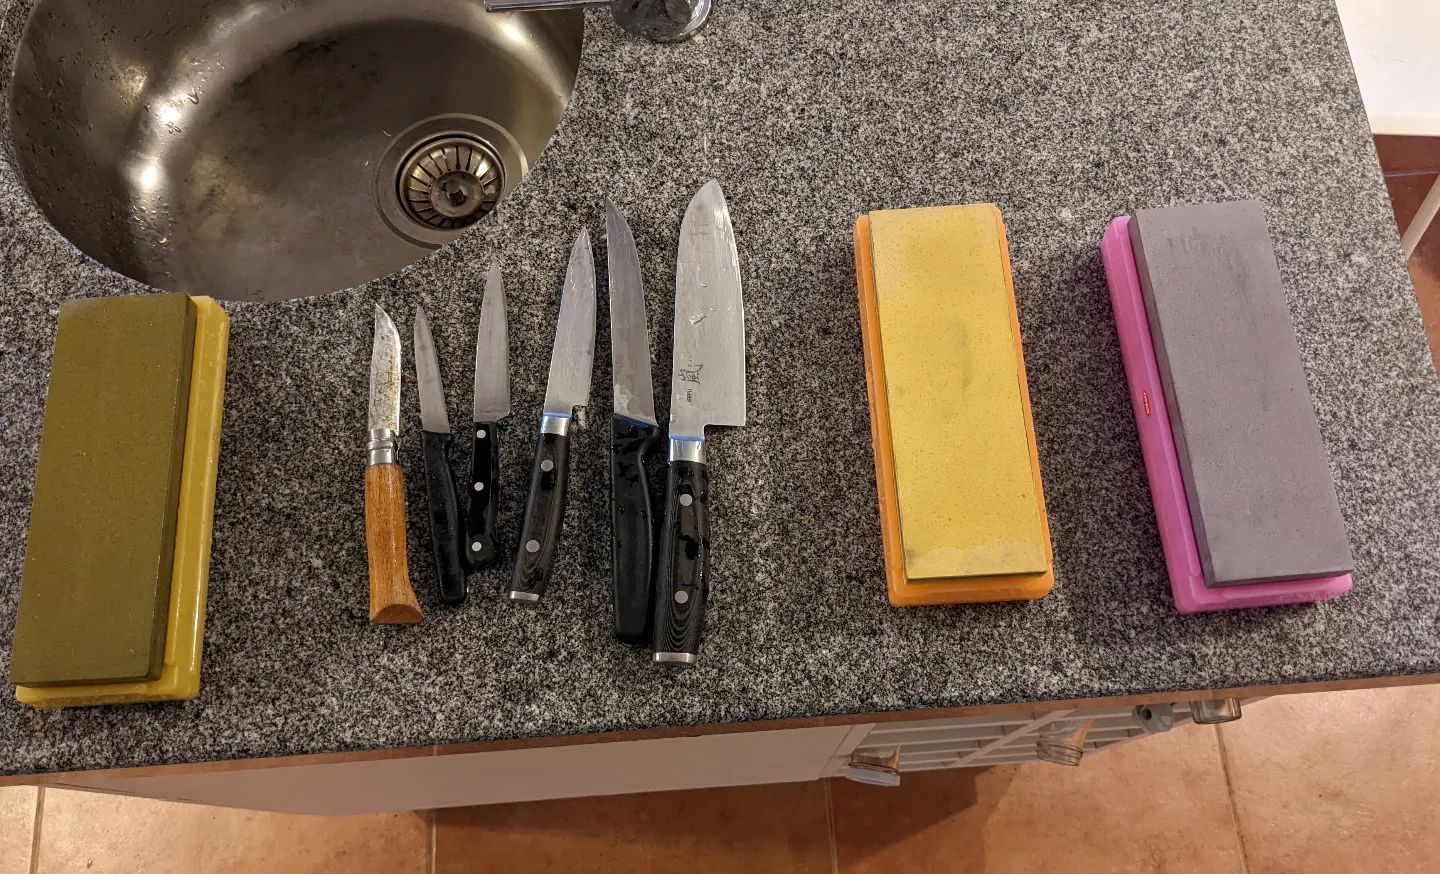 Knife sharpening day